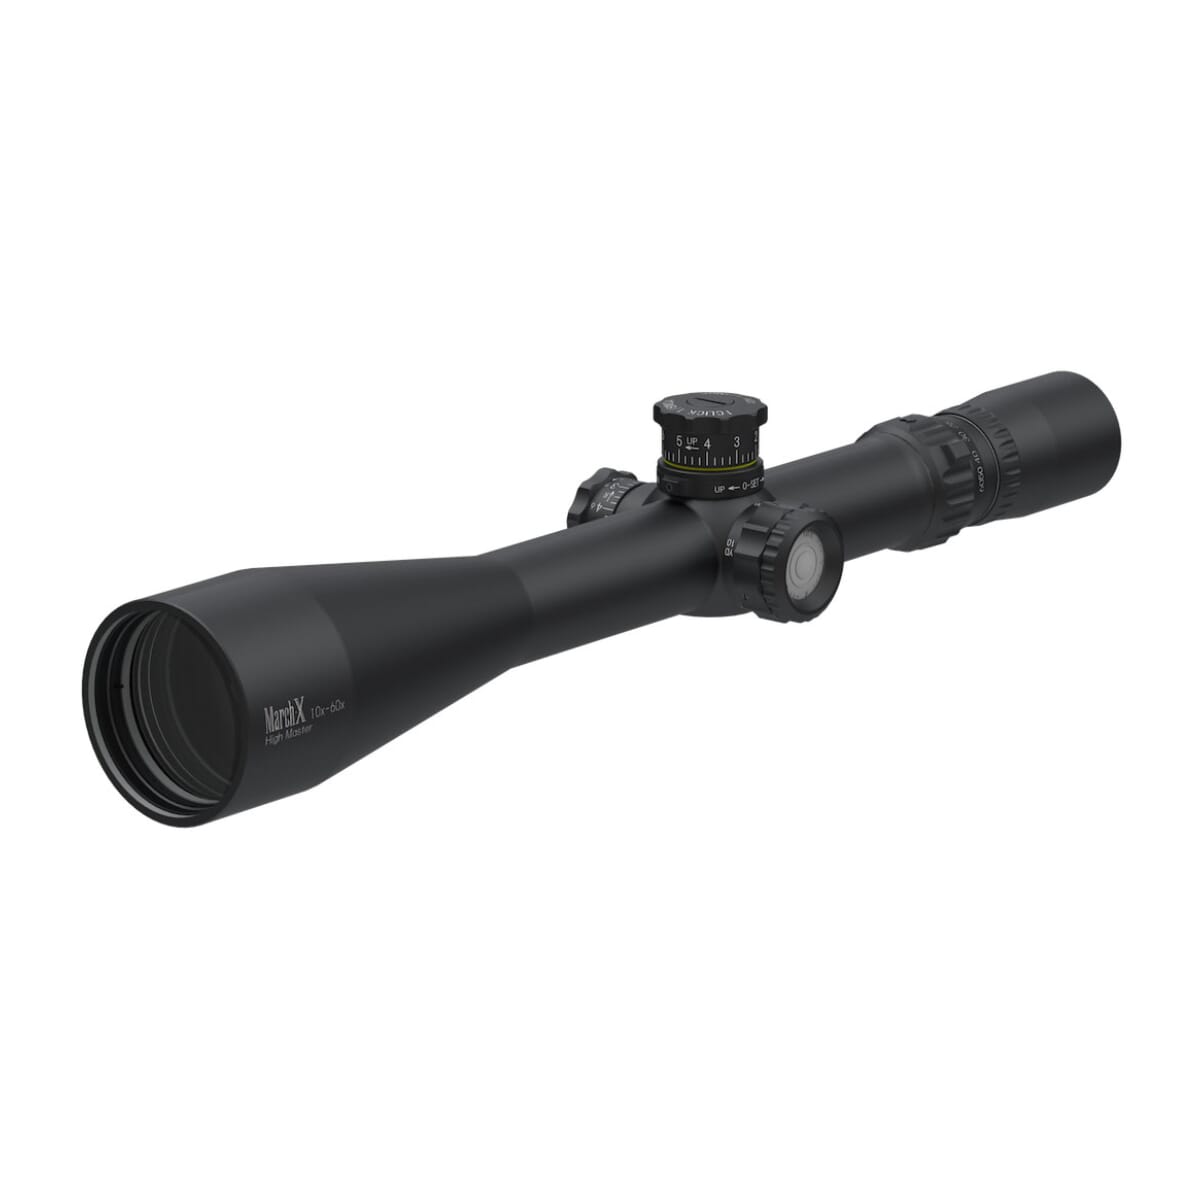 March X "High Master" 10-60x56mm MTR-1 Reticle 1/8MOA Illuminated Riflescope D60HV56TI-MTR-1-800172